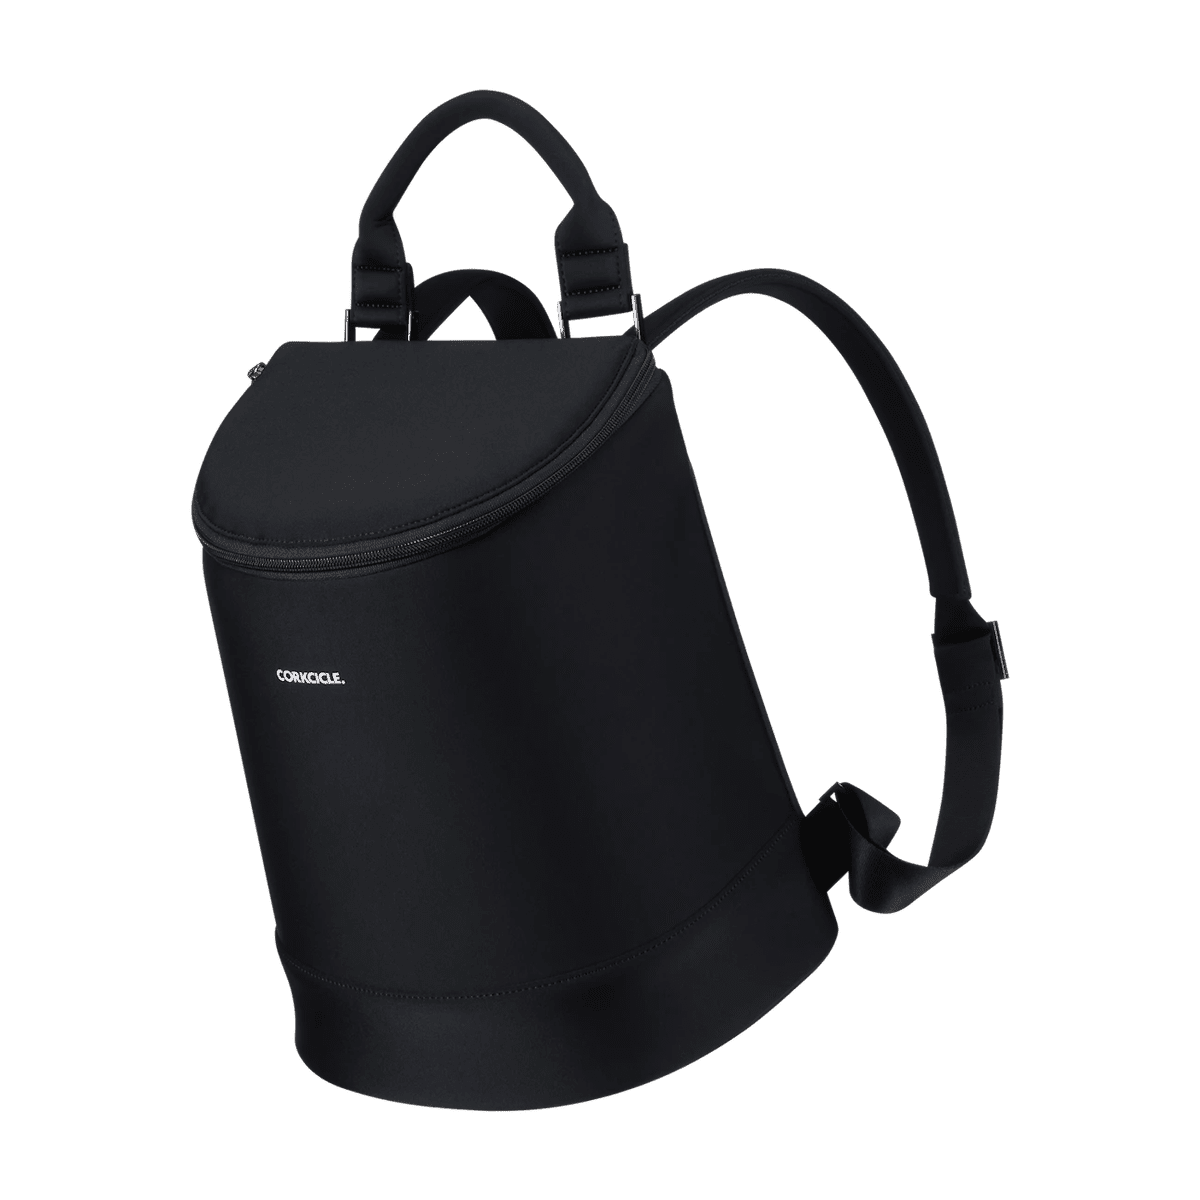 Corkcicle Eola Cooler Bag review